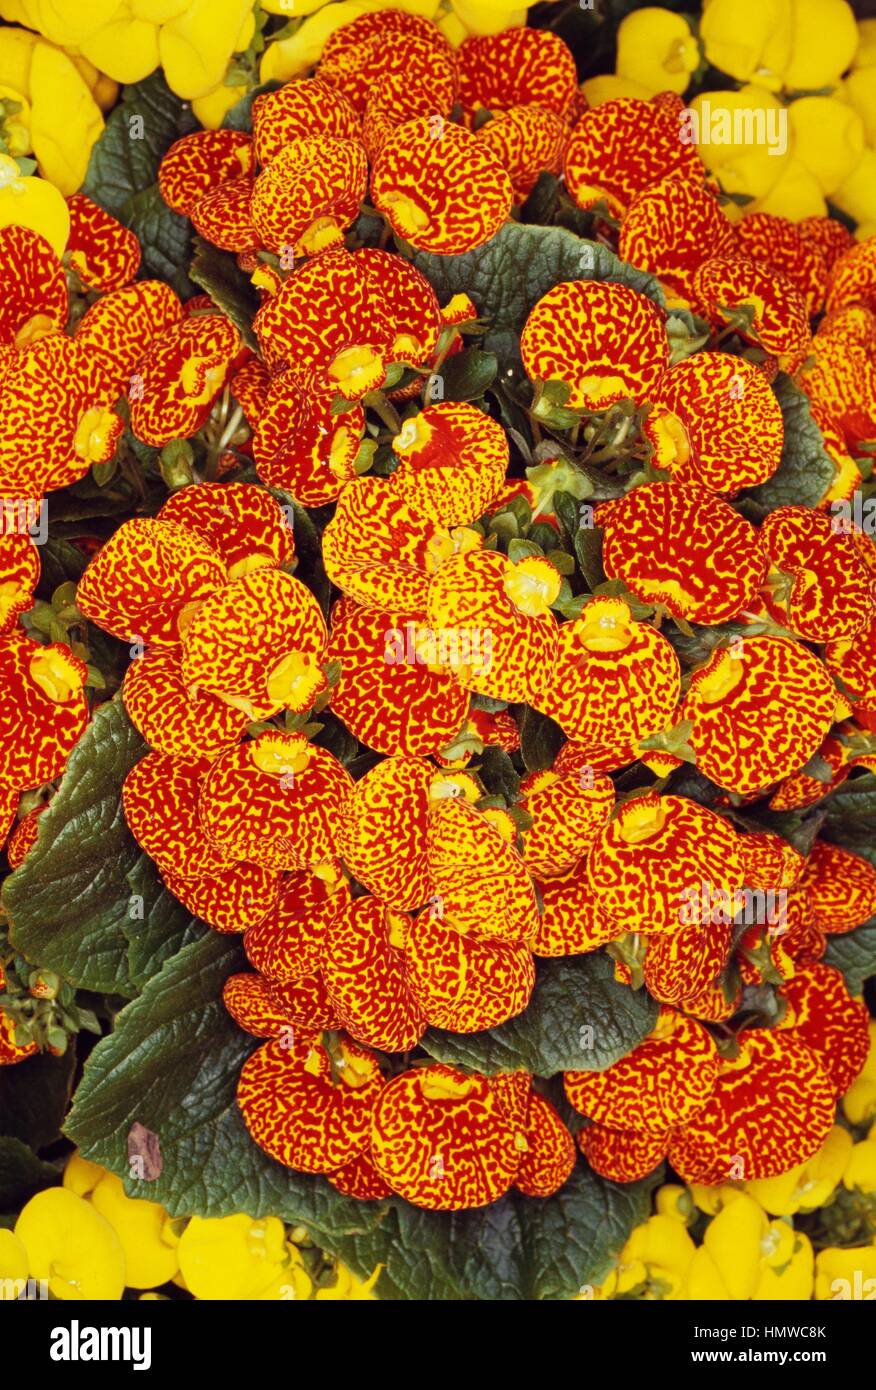 Slipper Flower, Slipperwort (Calceolaria integrifolia or Calceolaria rugosa Little Sweeties Mixed), Scrophulariaceae. Stock Photo